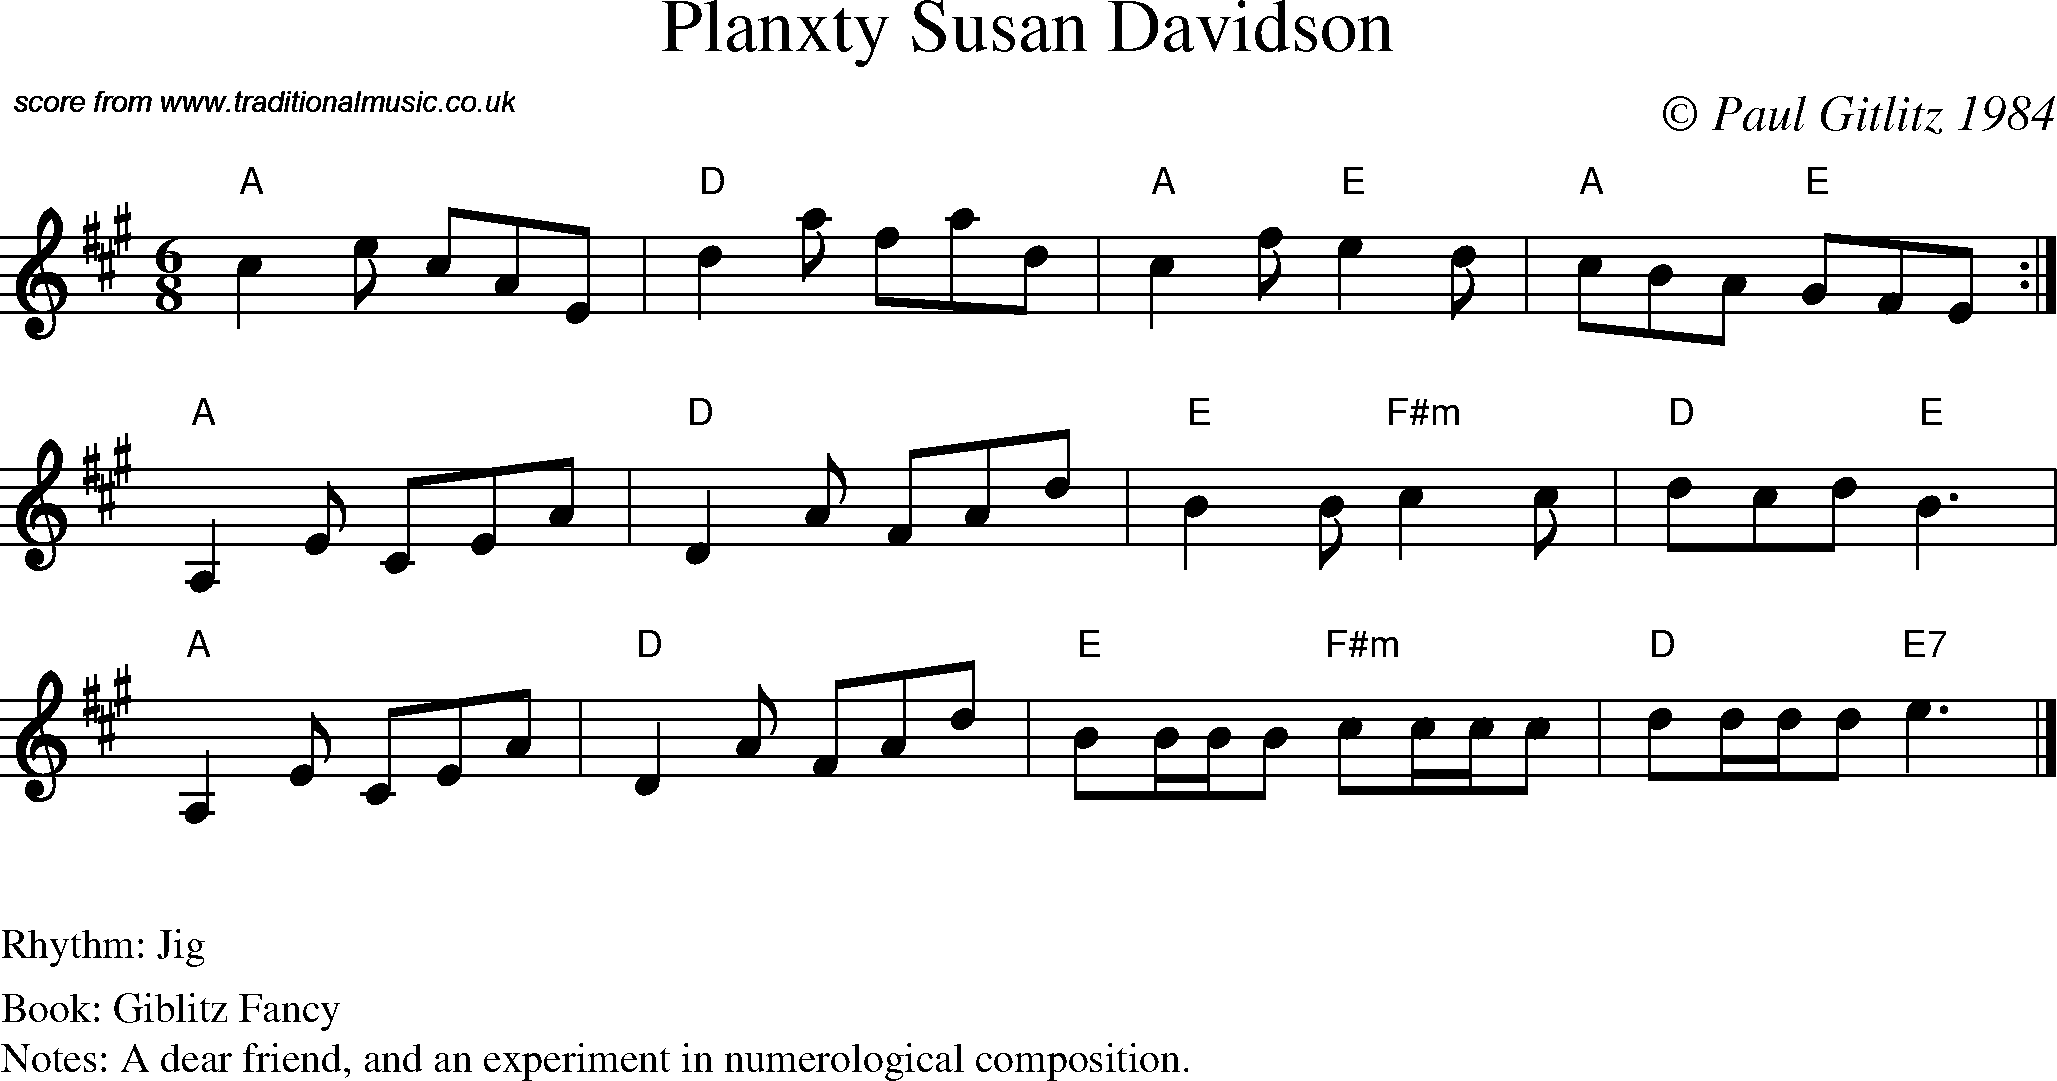 Sheet Music Score for Jig - Planxty Susan Davidson